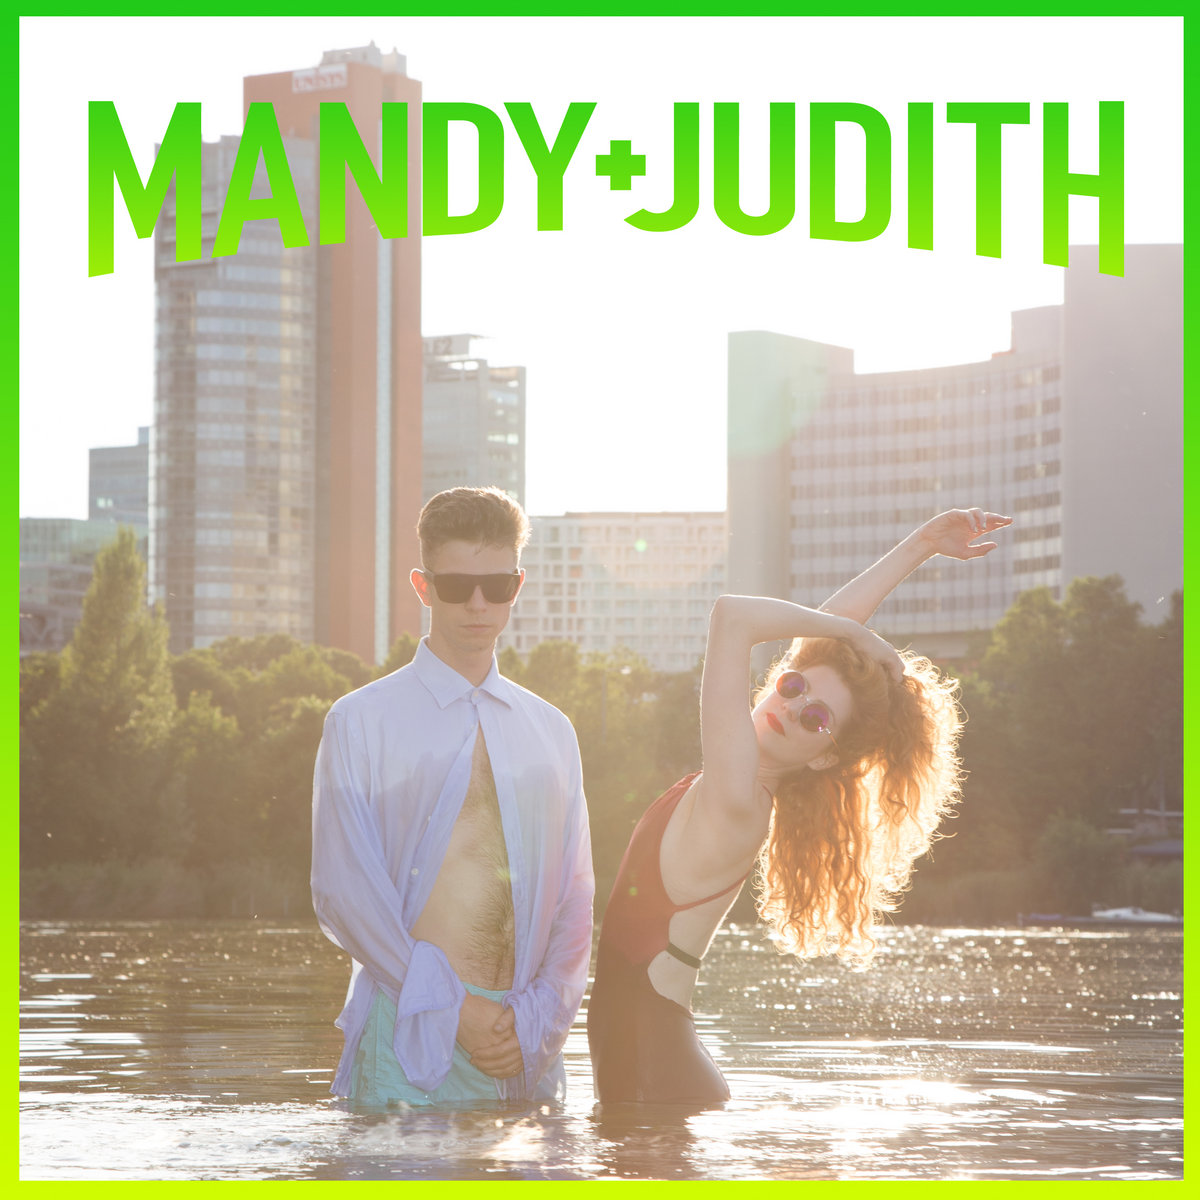 Mandy + Judith